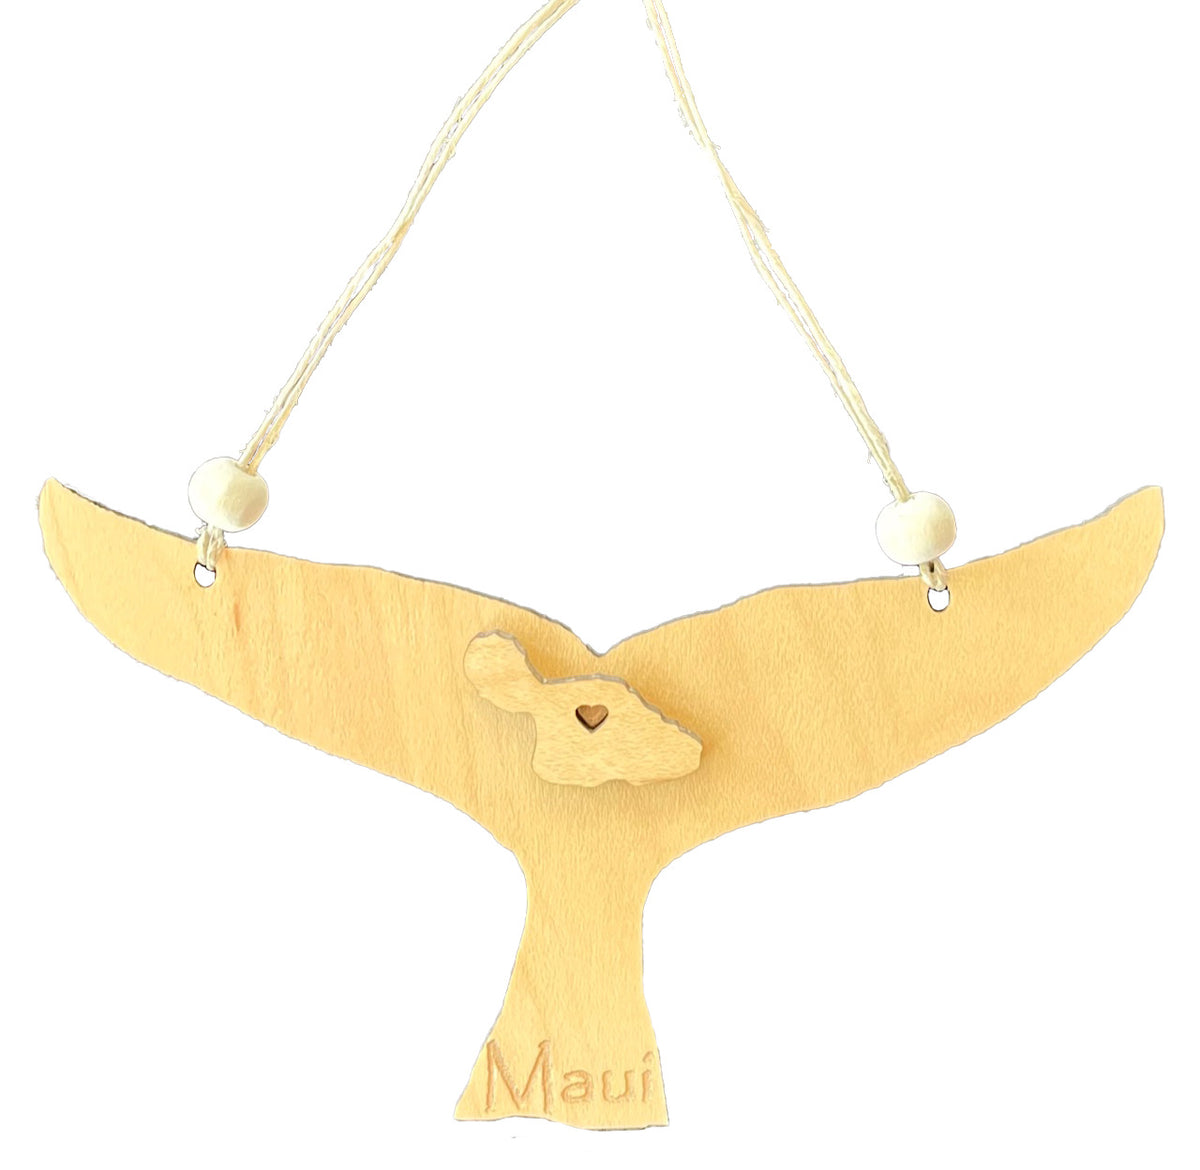 Pop-Up Mākeke - Maui Island Love - Whale&#39;s Tail Wooden Ornament